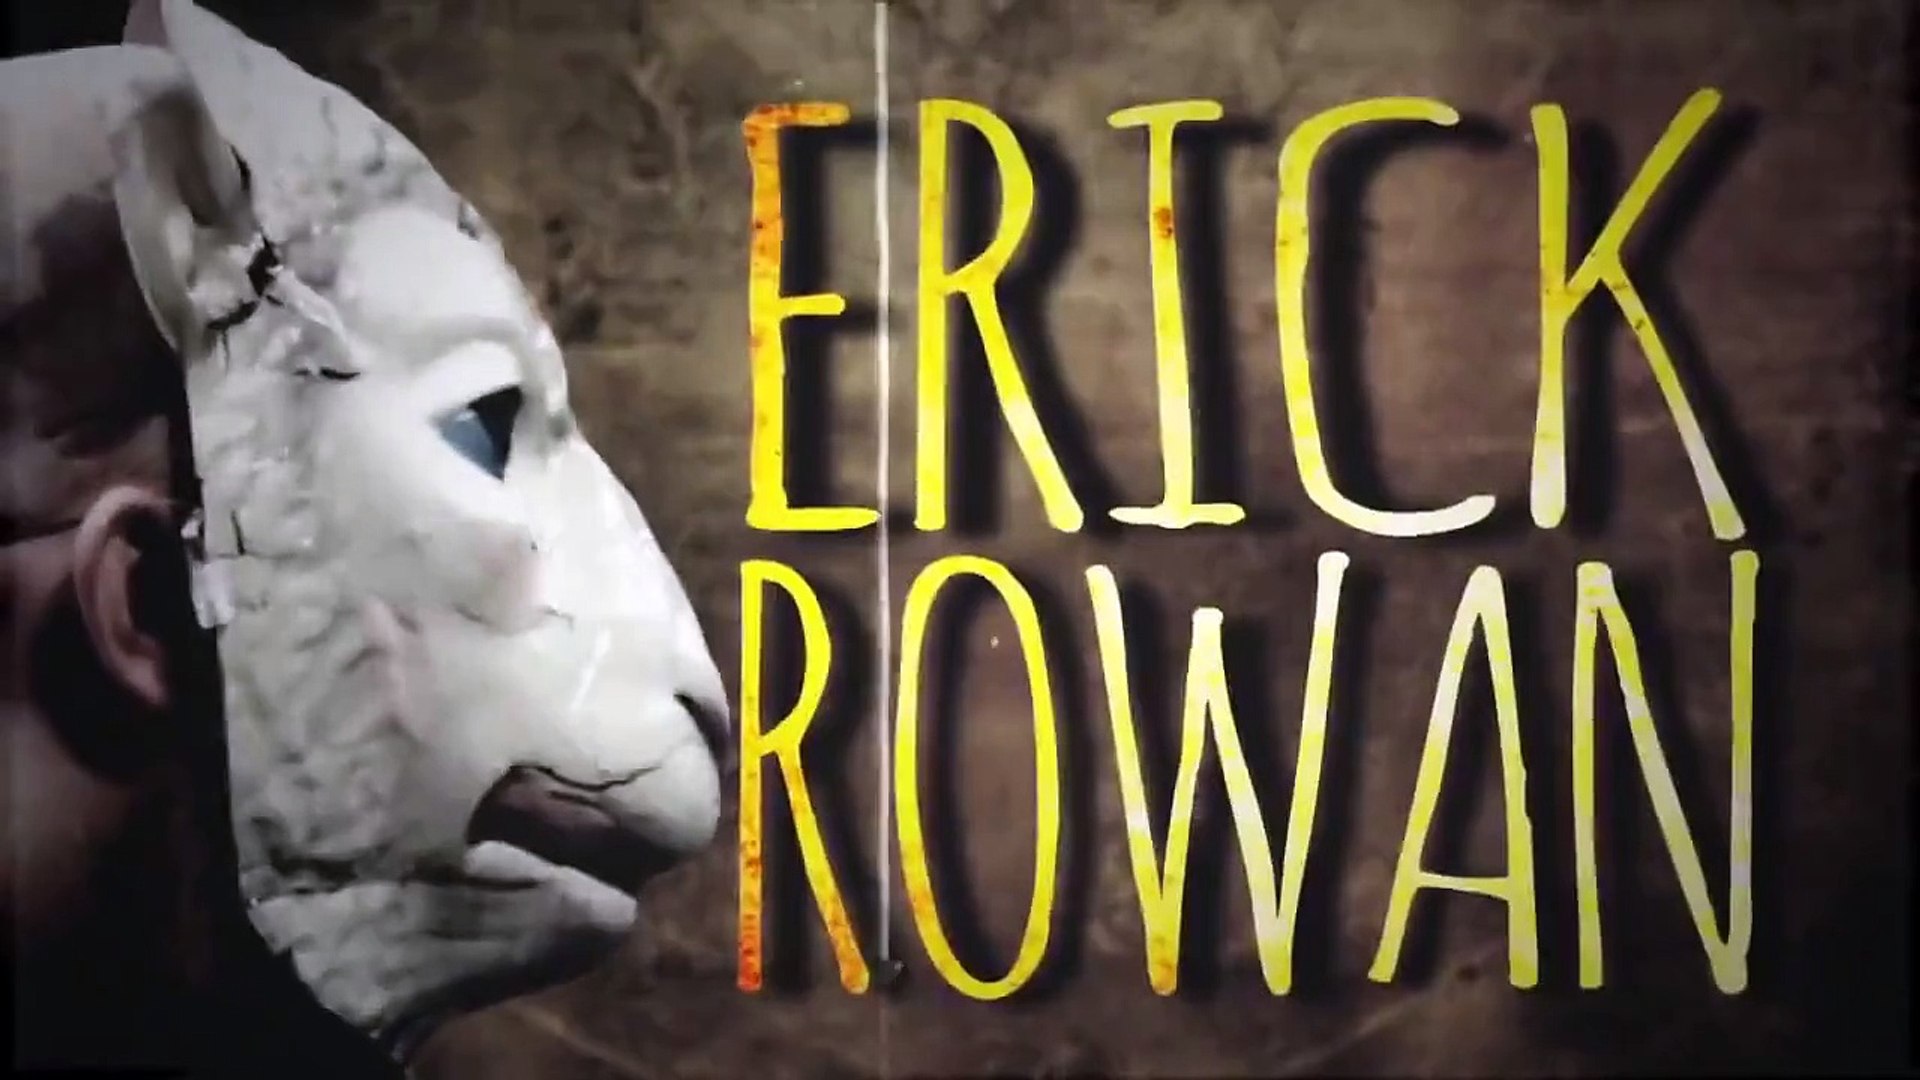 WWE Sheepherder ▻ Erick Rowan 3th New WWE Theme Song With Entrance Video 2014 2015 (Full HD 720p)